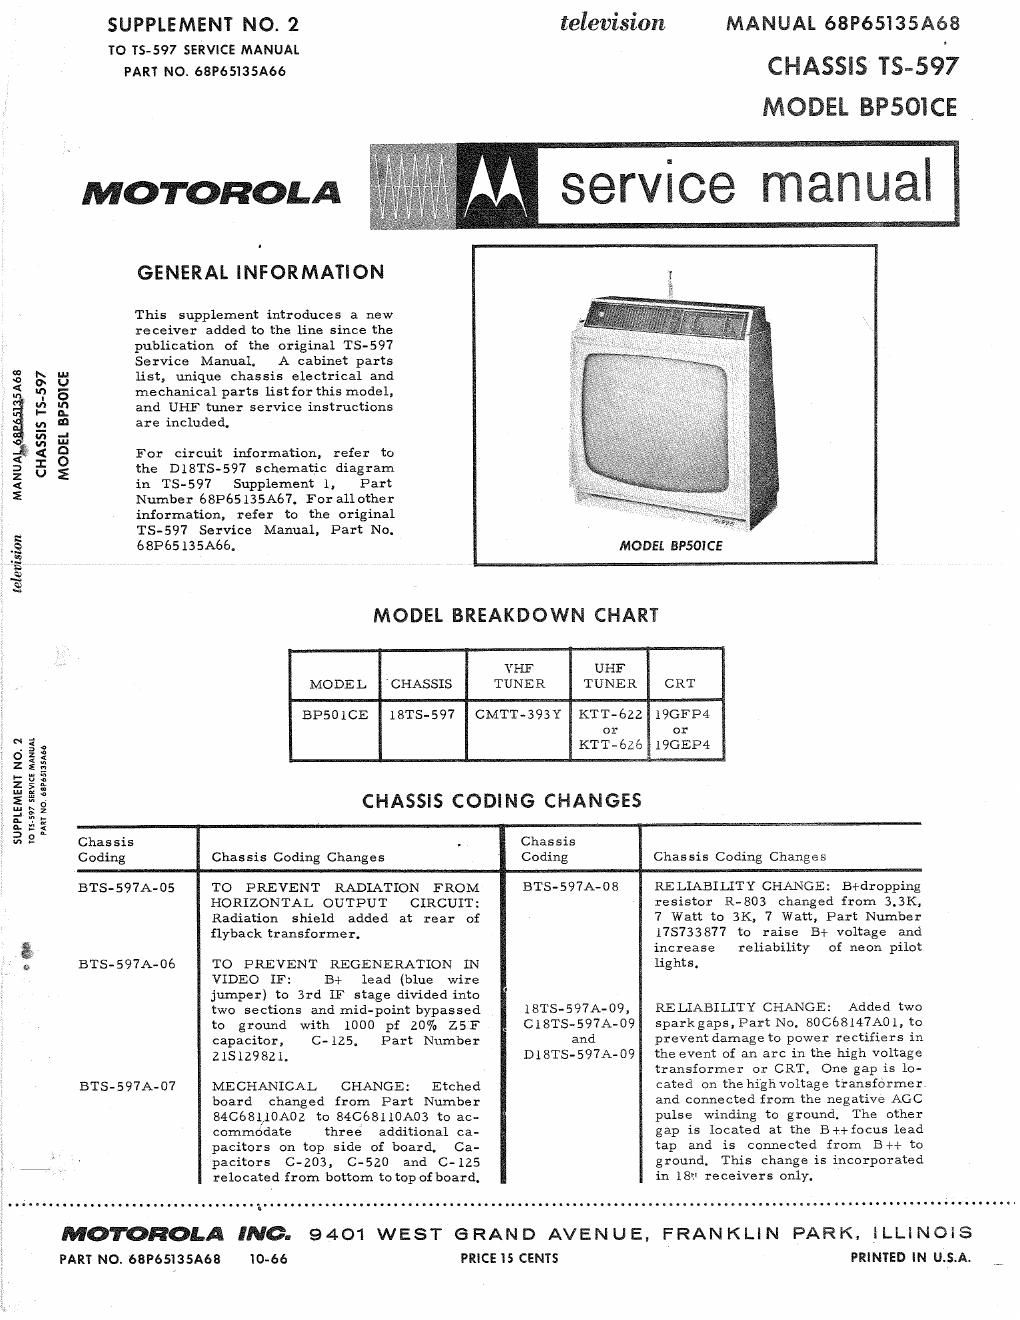 motorola bp 501 ce service manual